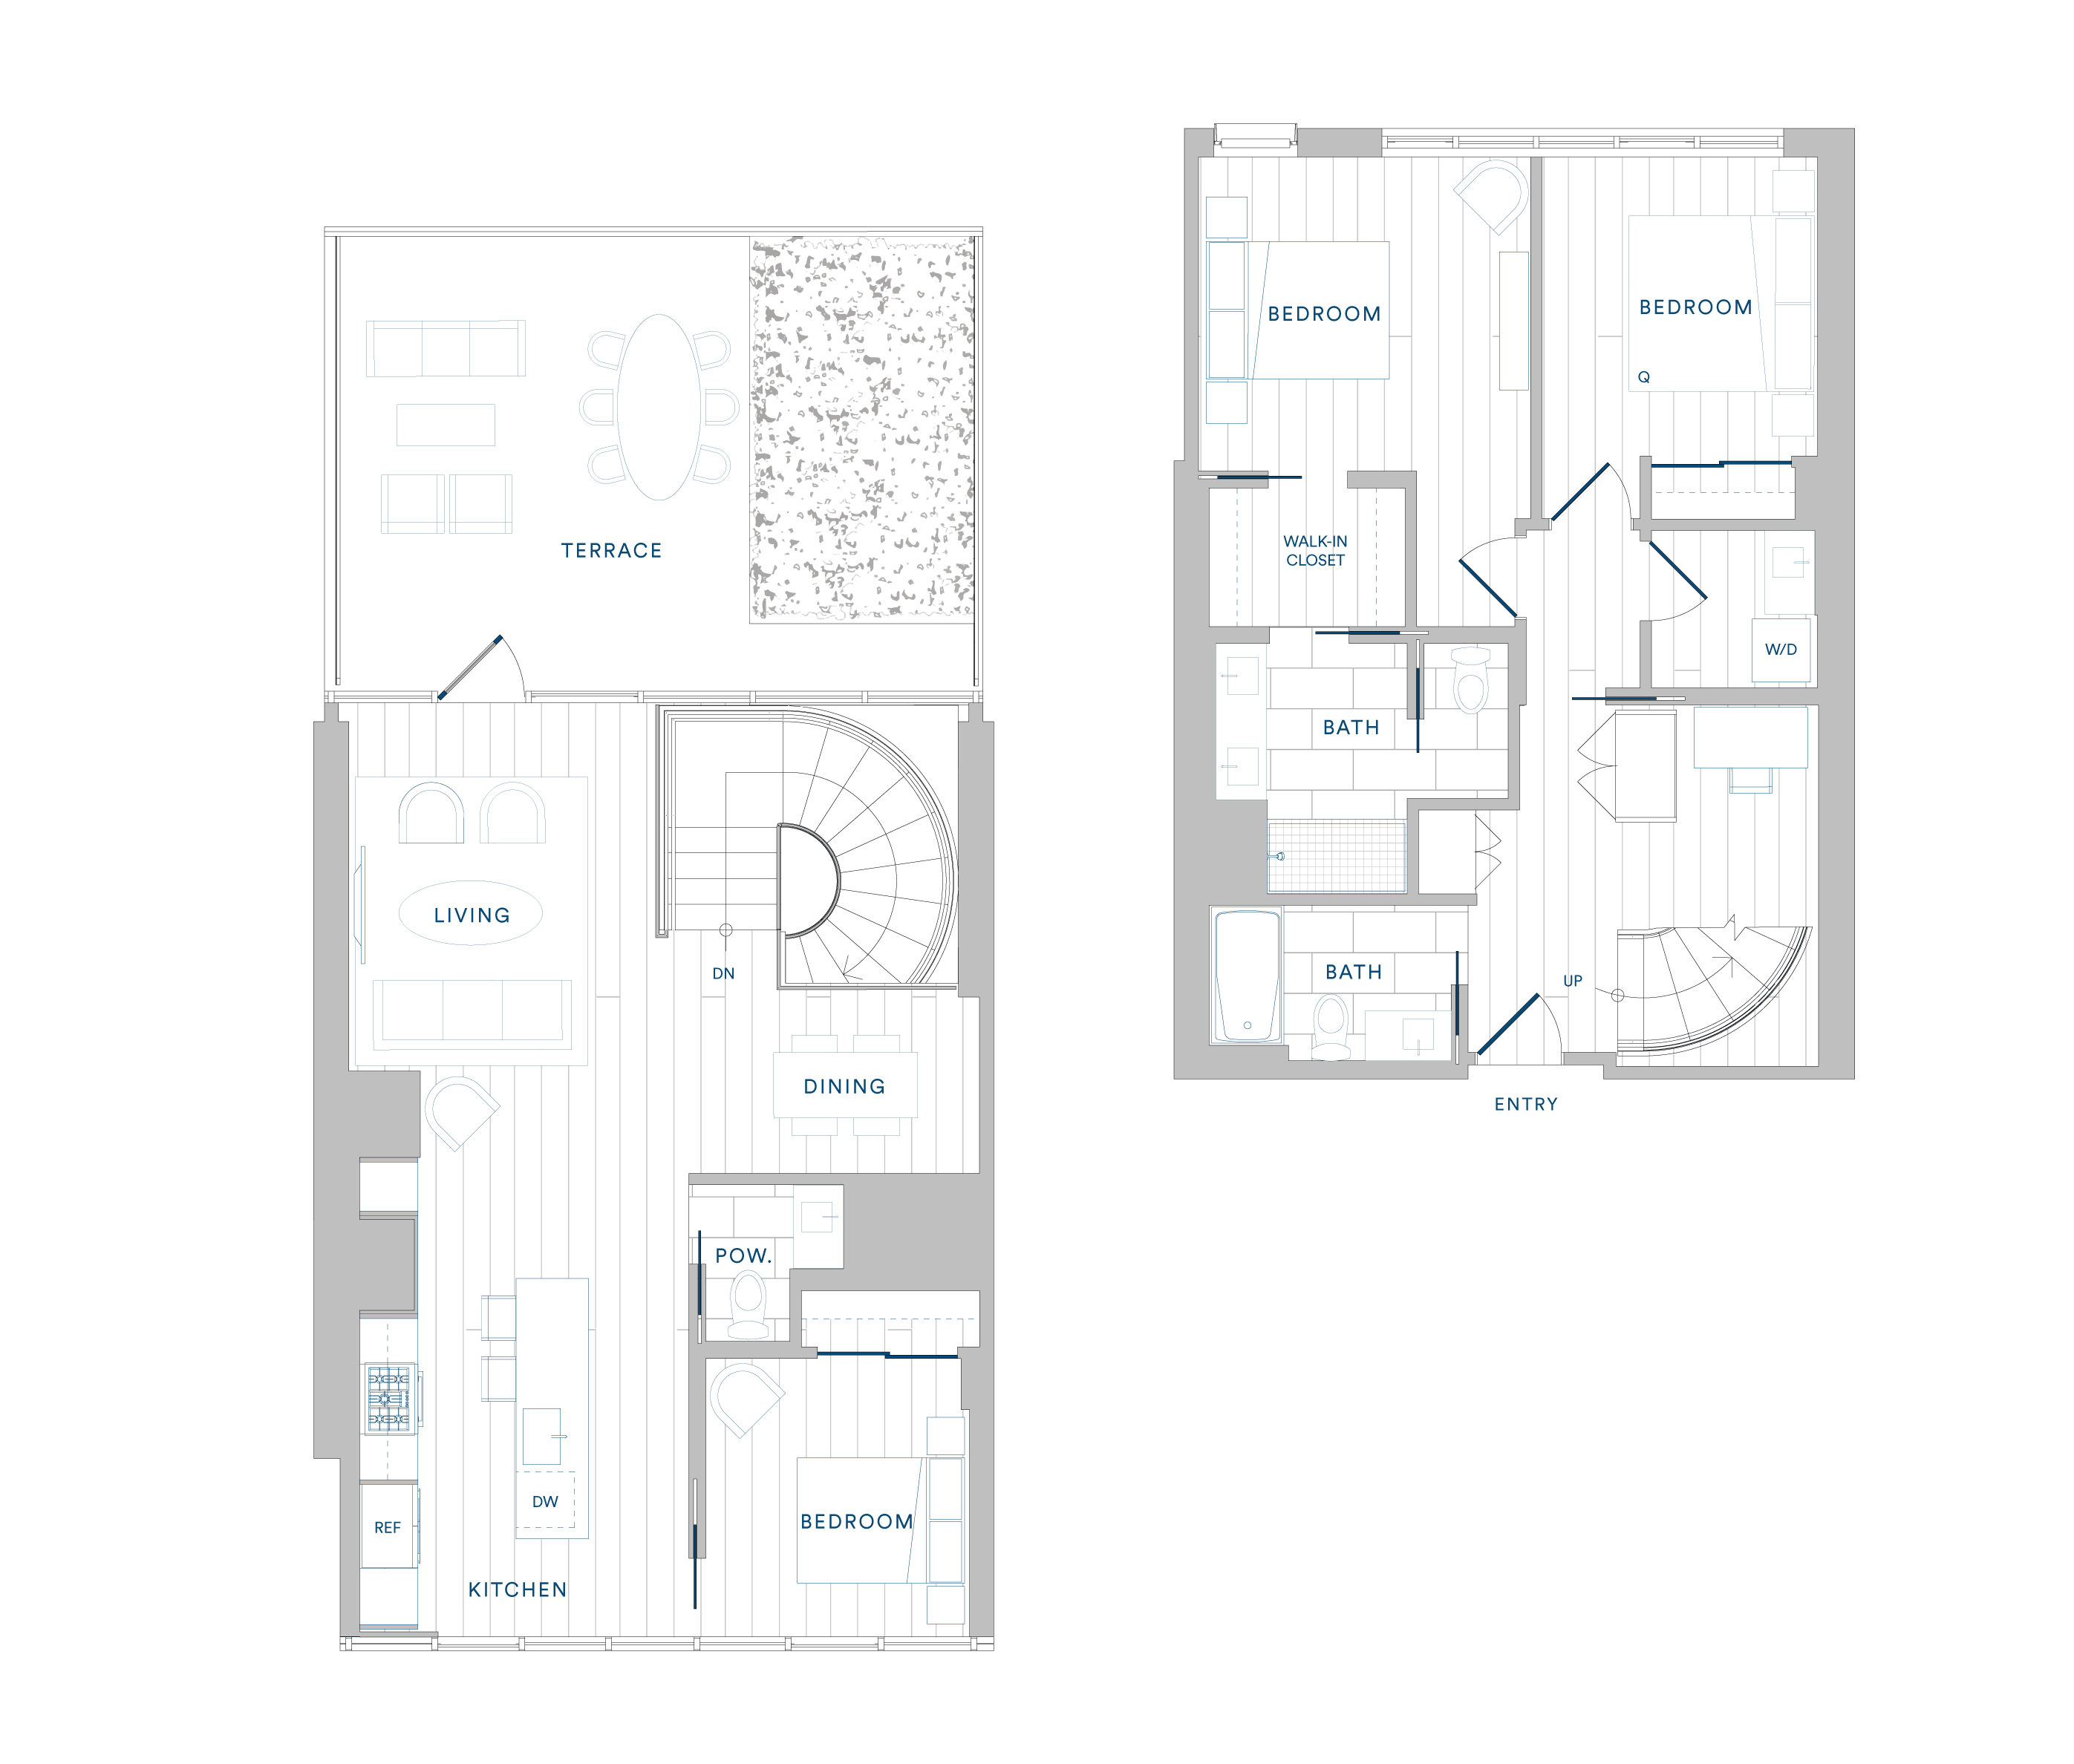 Floorplan for Apartment #1306, 2 bedroom unit at Margarite